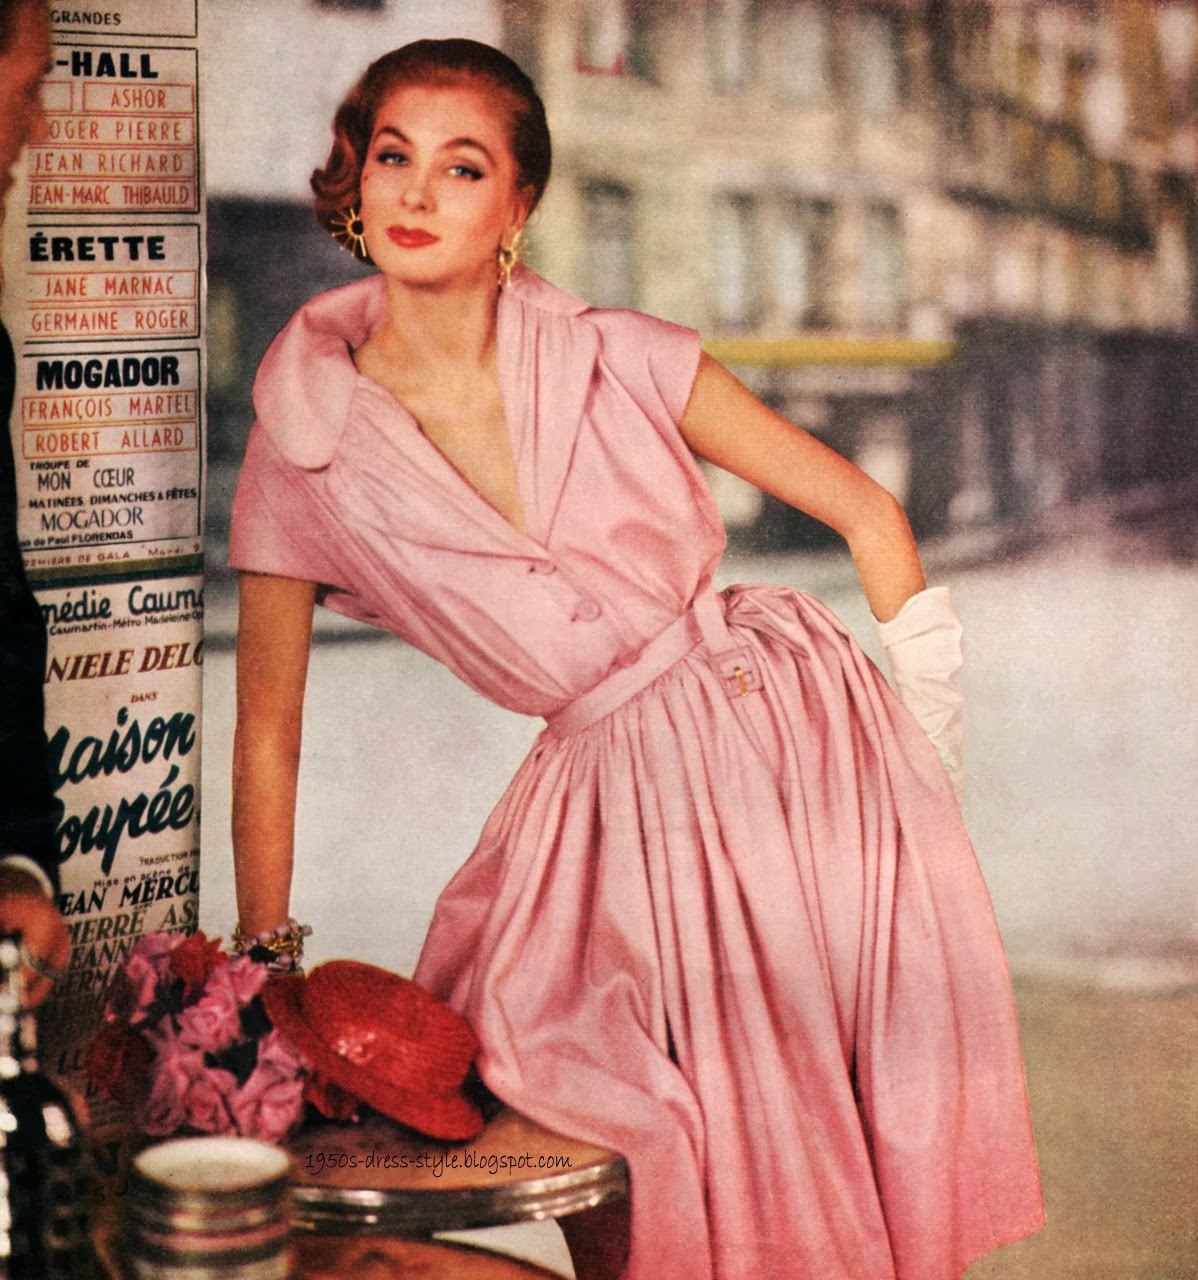 1950s Fashion 1950s Dress Style